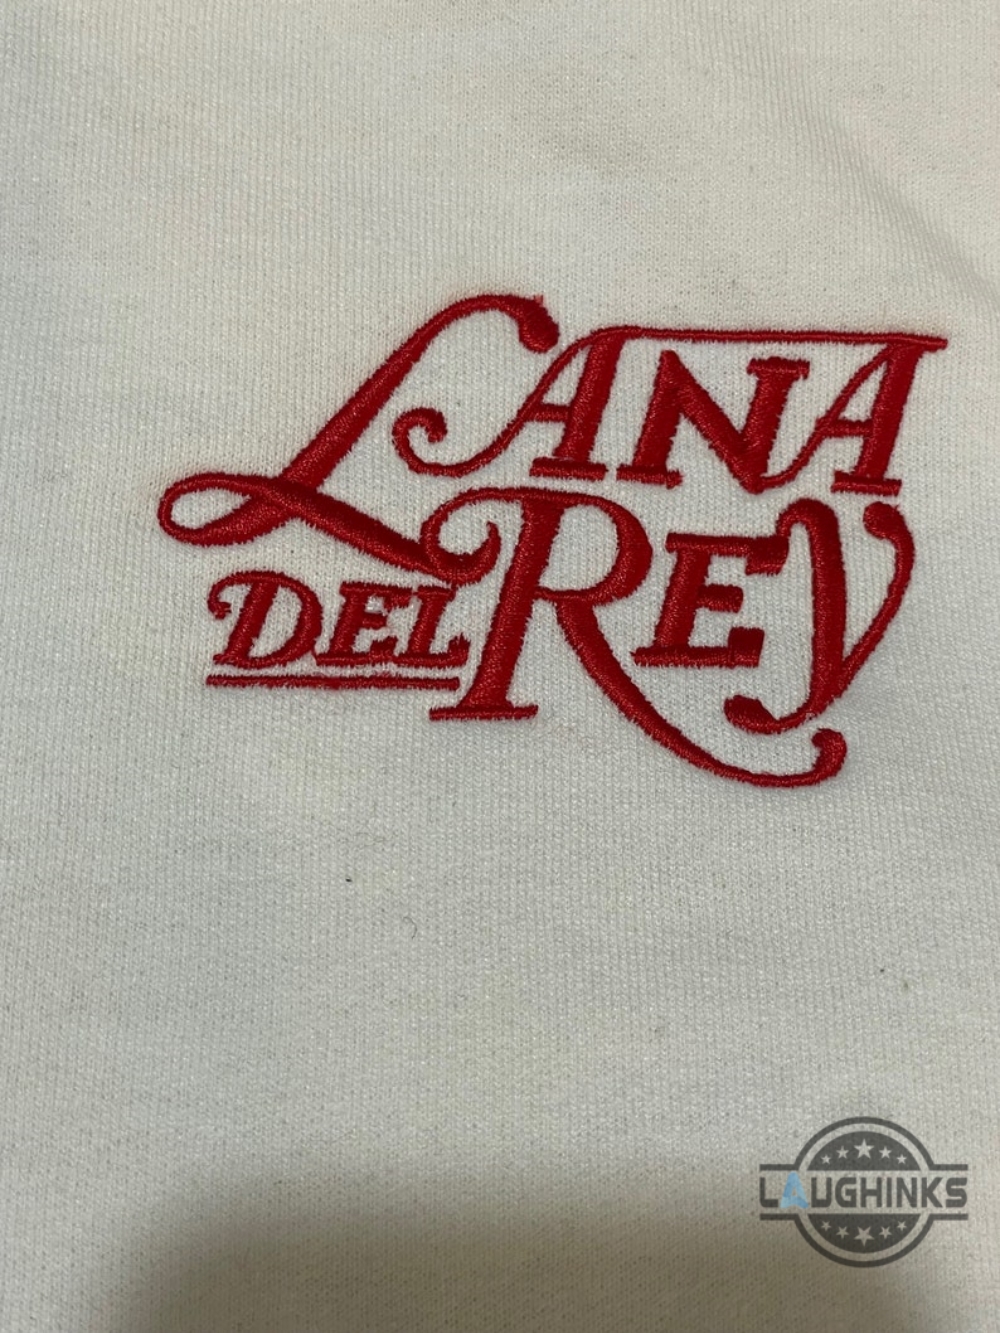 Lana Del Rey T Shirt Sweatshirt Hoodie Mens Womens Lana Del Rey Embroidered Crewneck Shirts Lana Del Rey Embroidery Sweater Love Lana Del Rey Tour Tshirt